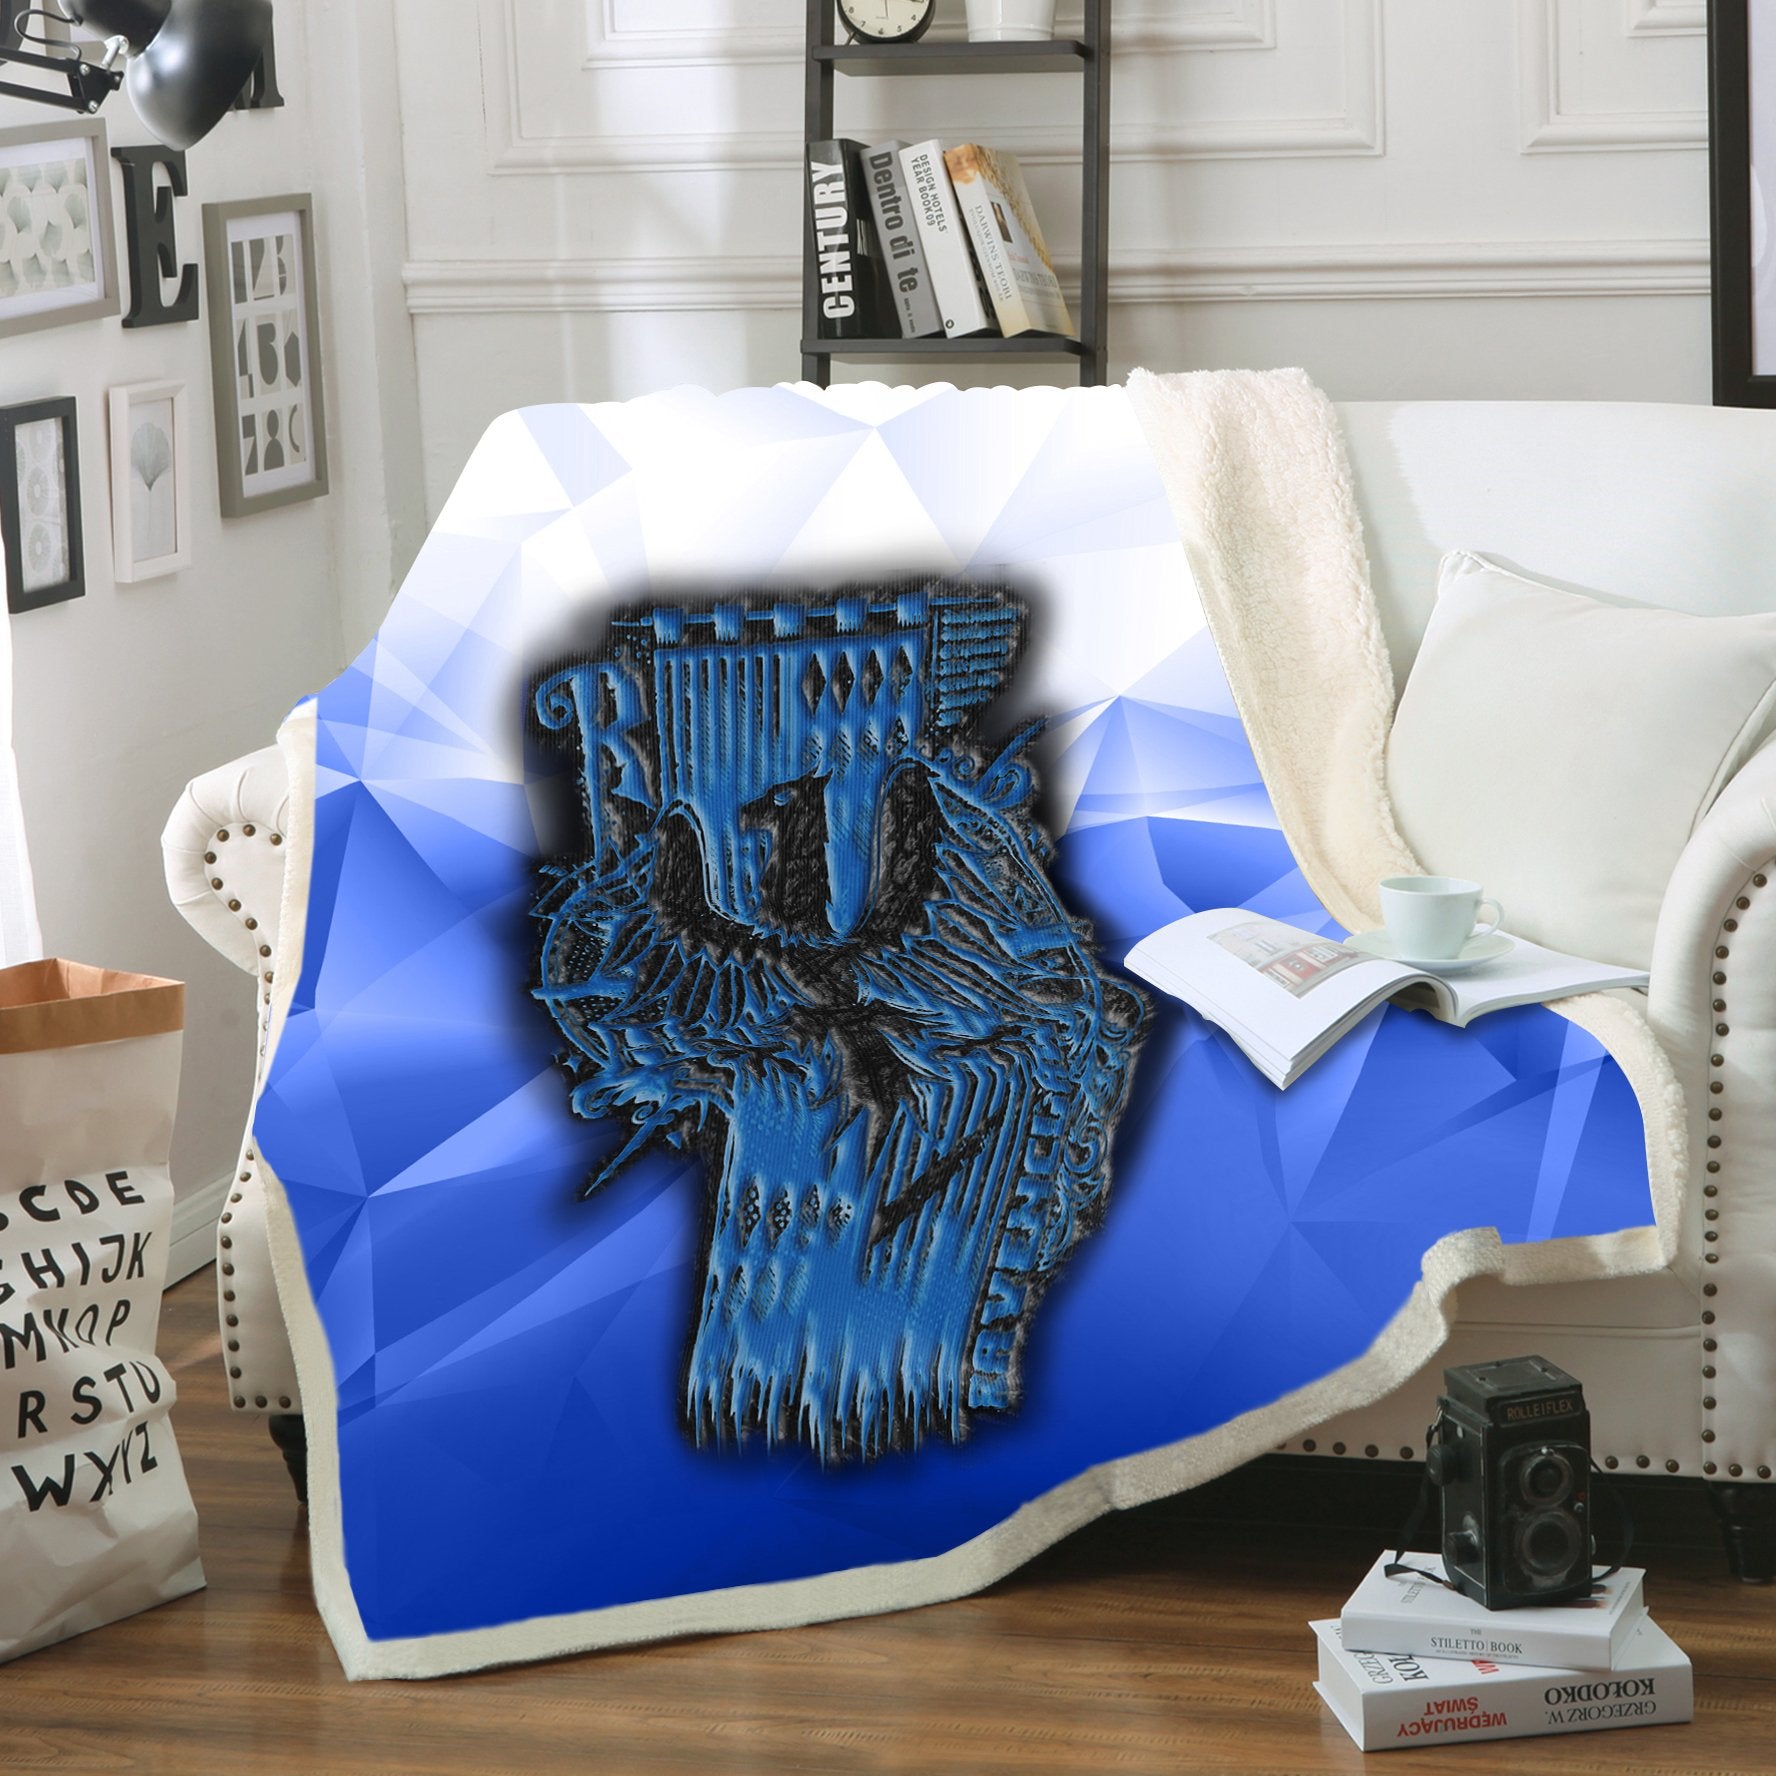 The Ravenclaw Eagle Harry Potter 3D Throw Blanket 130cm x 150cm  